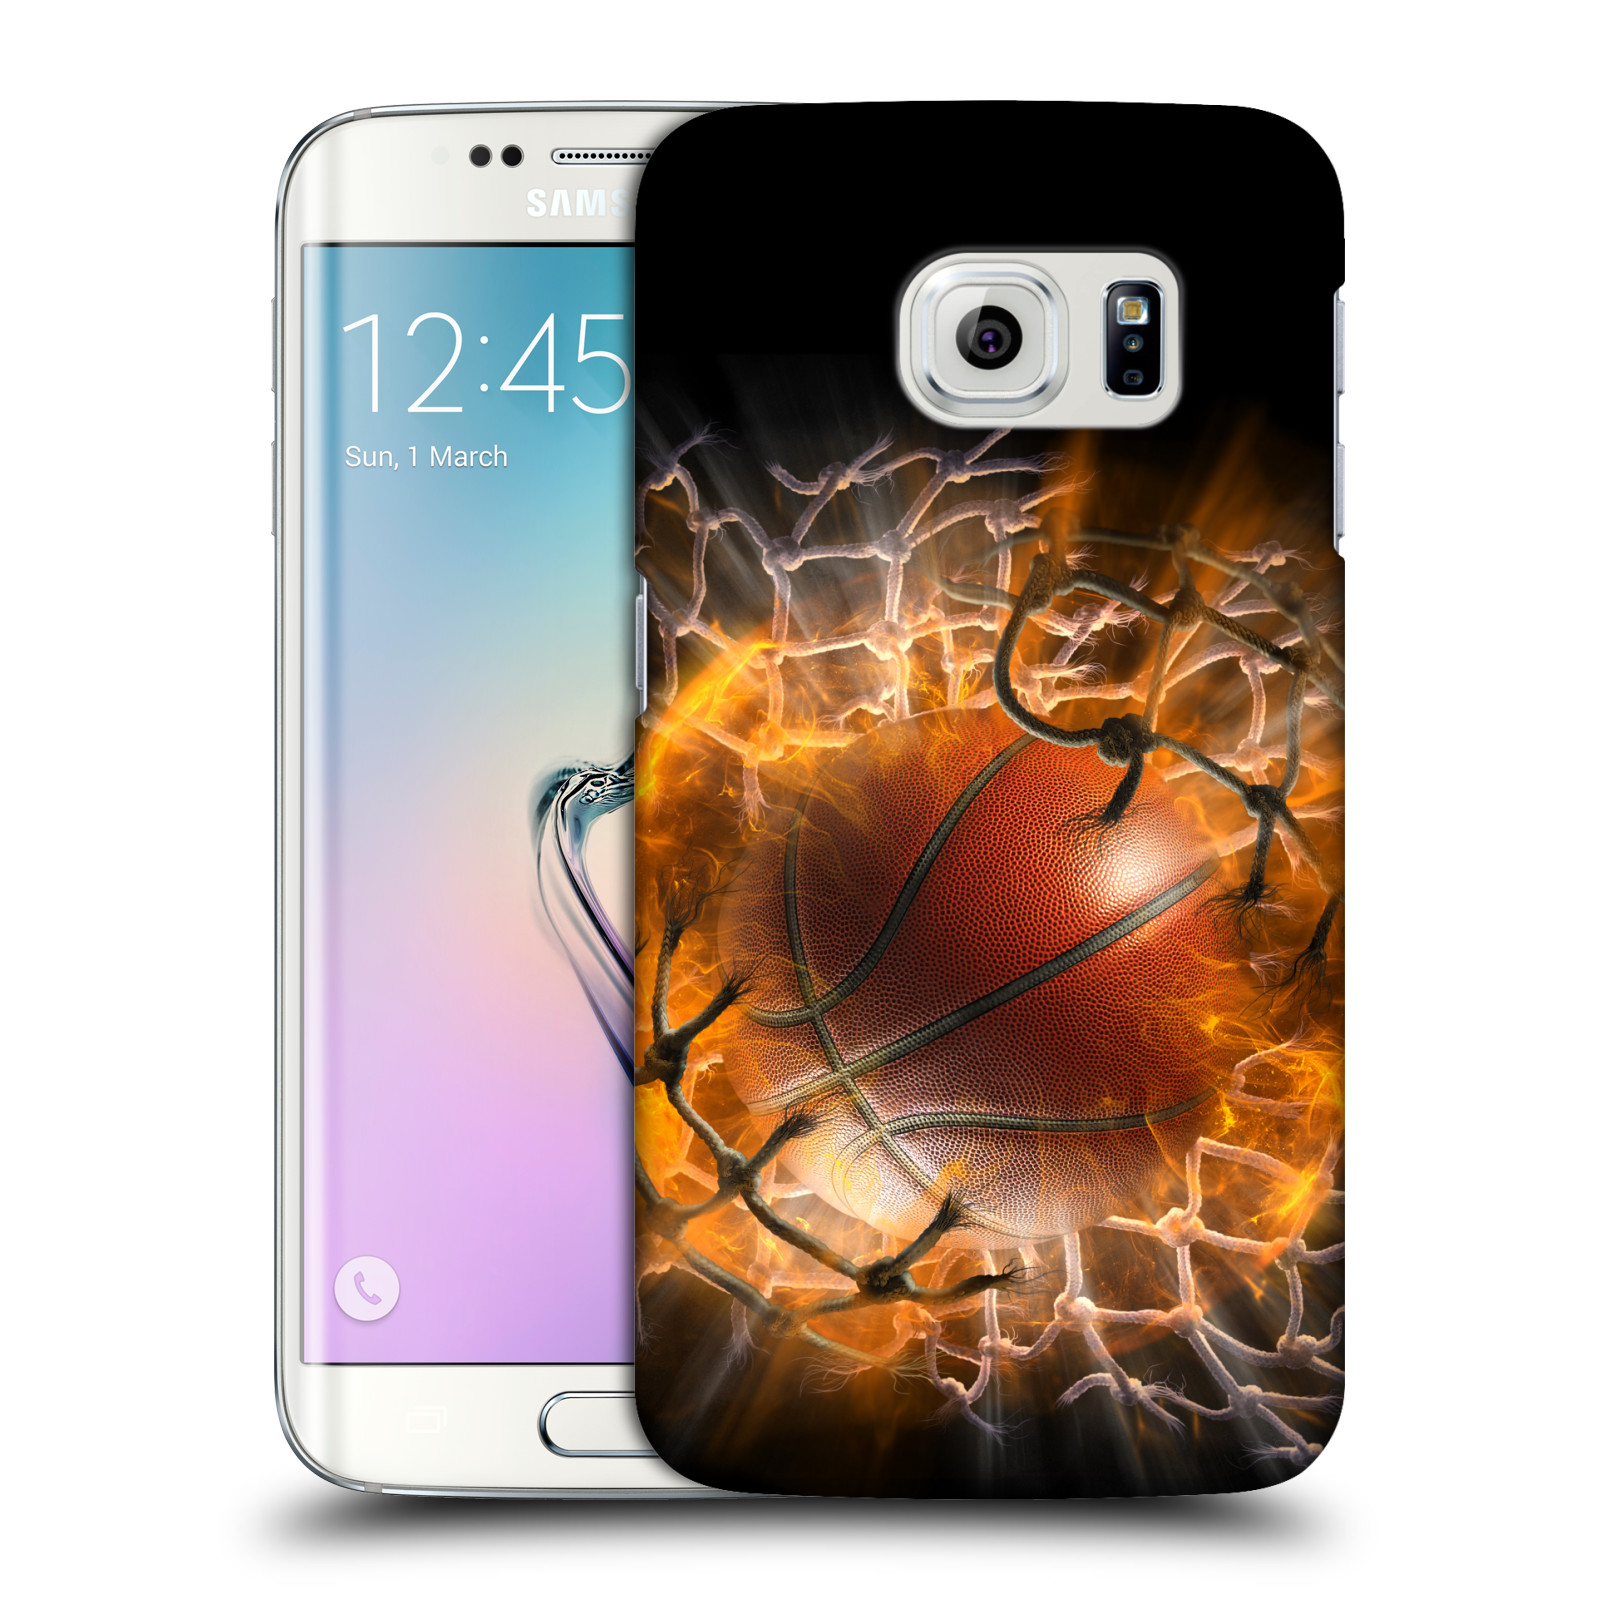 Pouzdro na mobil Samsung Galaxy S6 EDGE - HEAD CASE - Fantasy kresby Tom Wood - Basketball